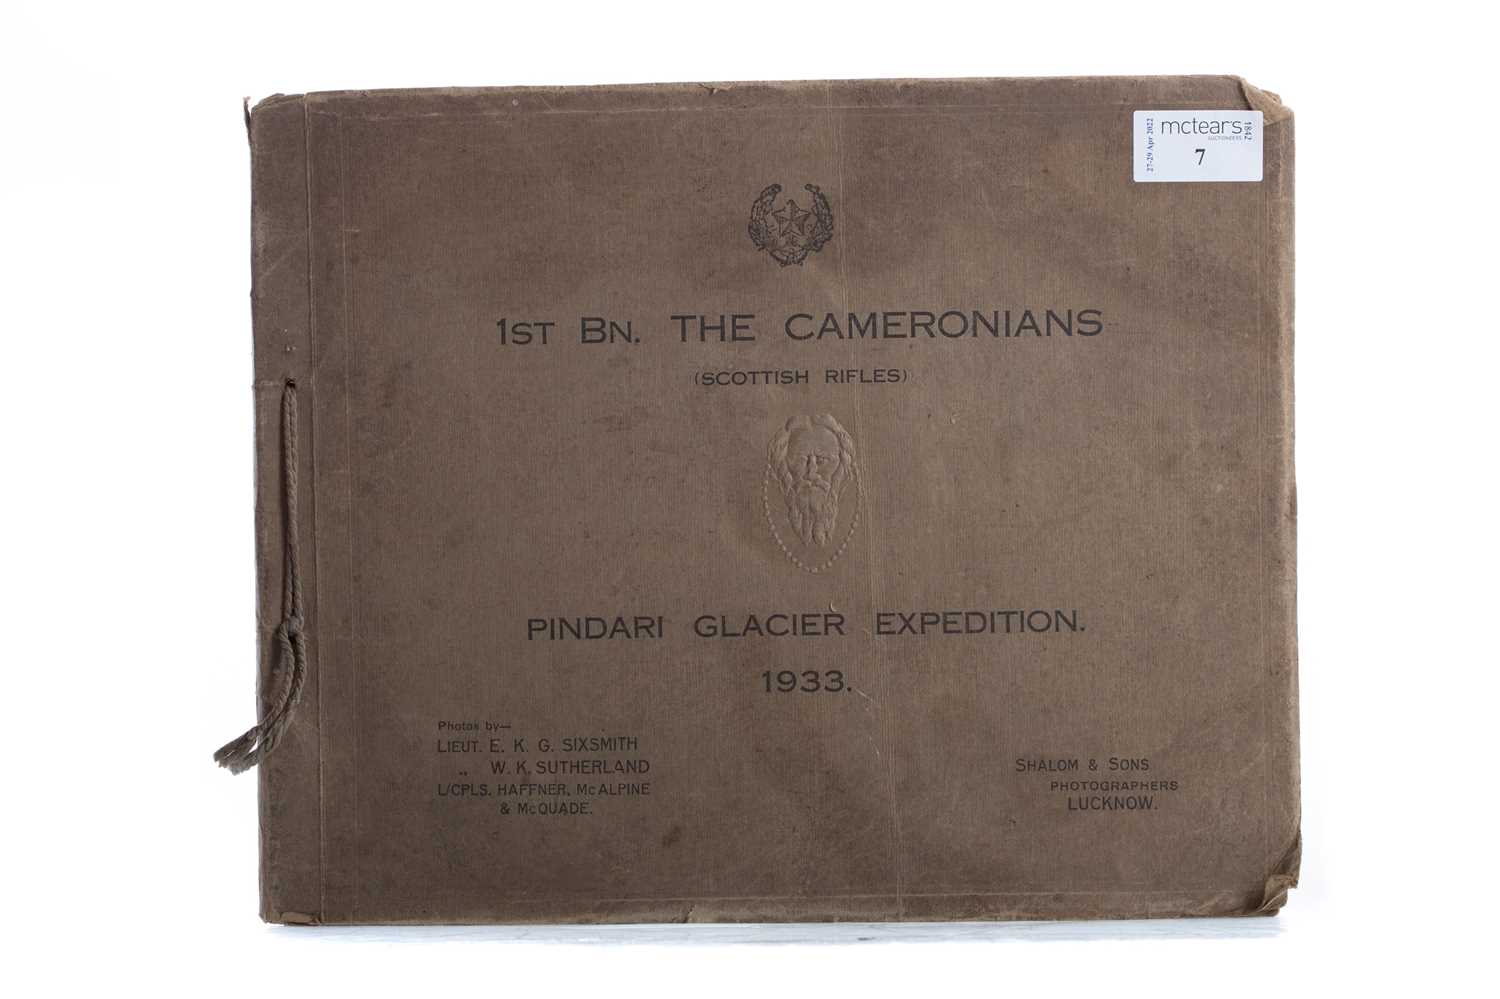 Lot 7 - 1ST BN. THE CAMERONIANS (SCOTTISH RIFLES) PINDARI GLACIER EXPEDITION 1933